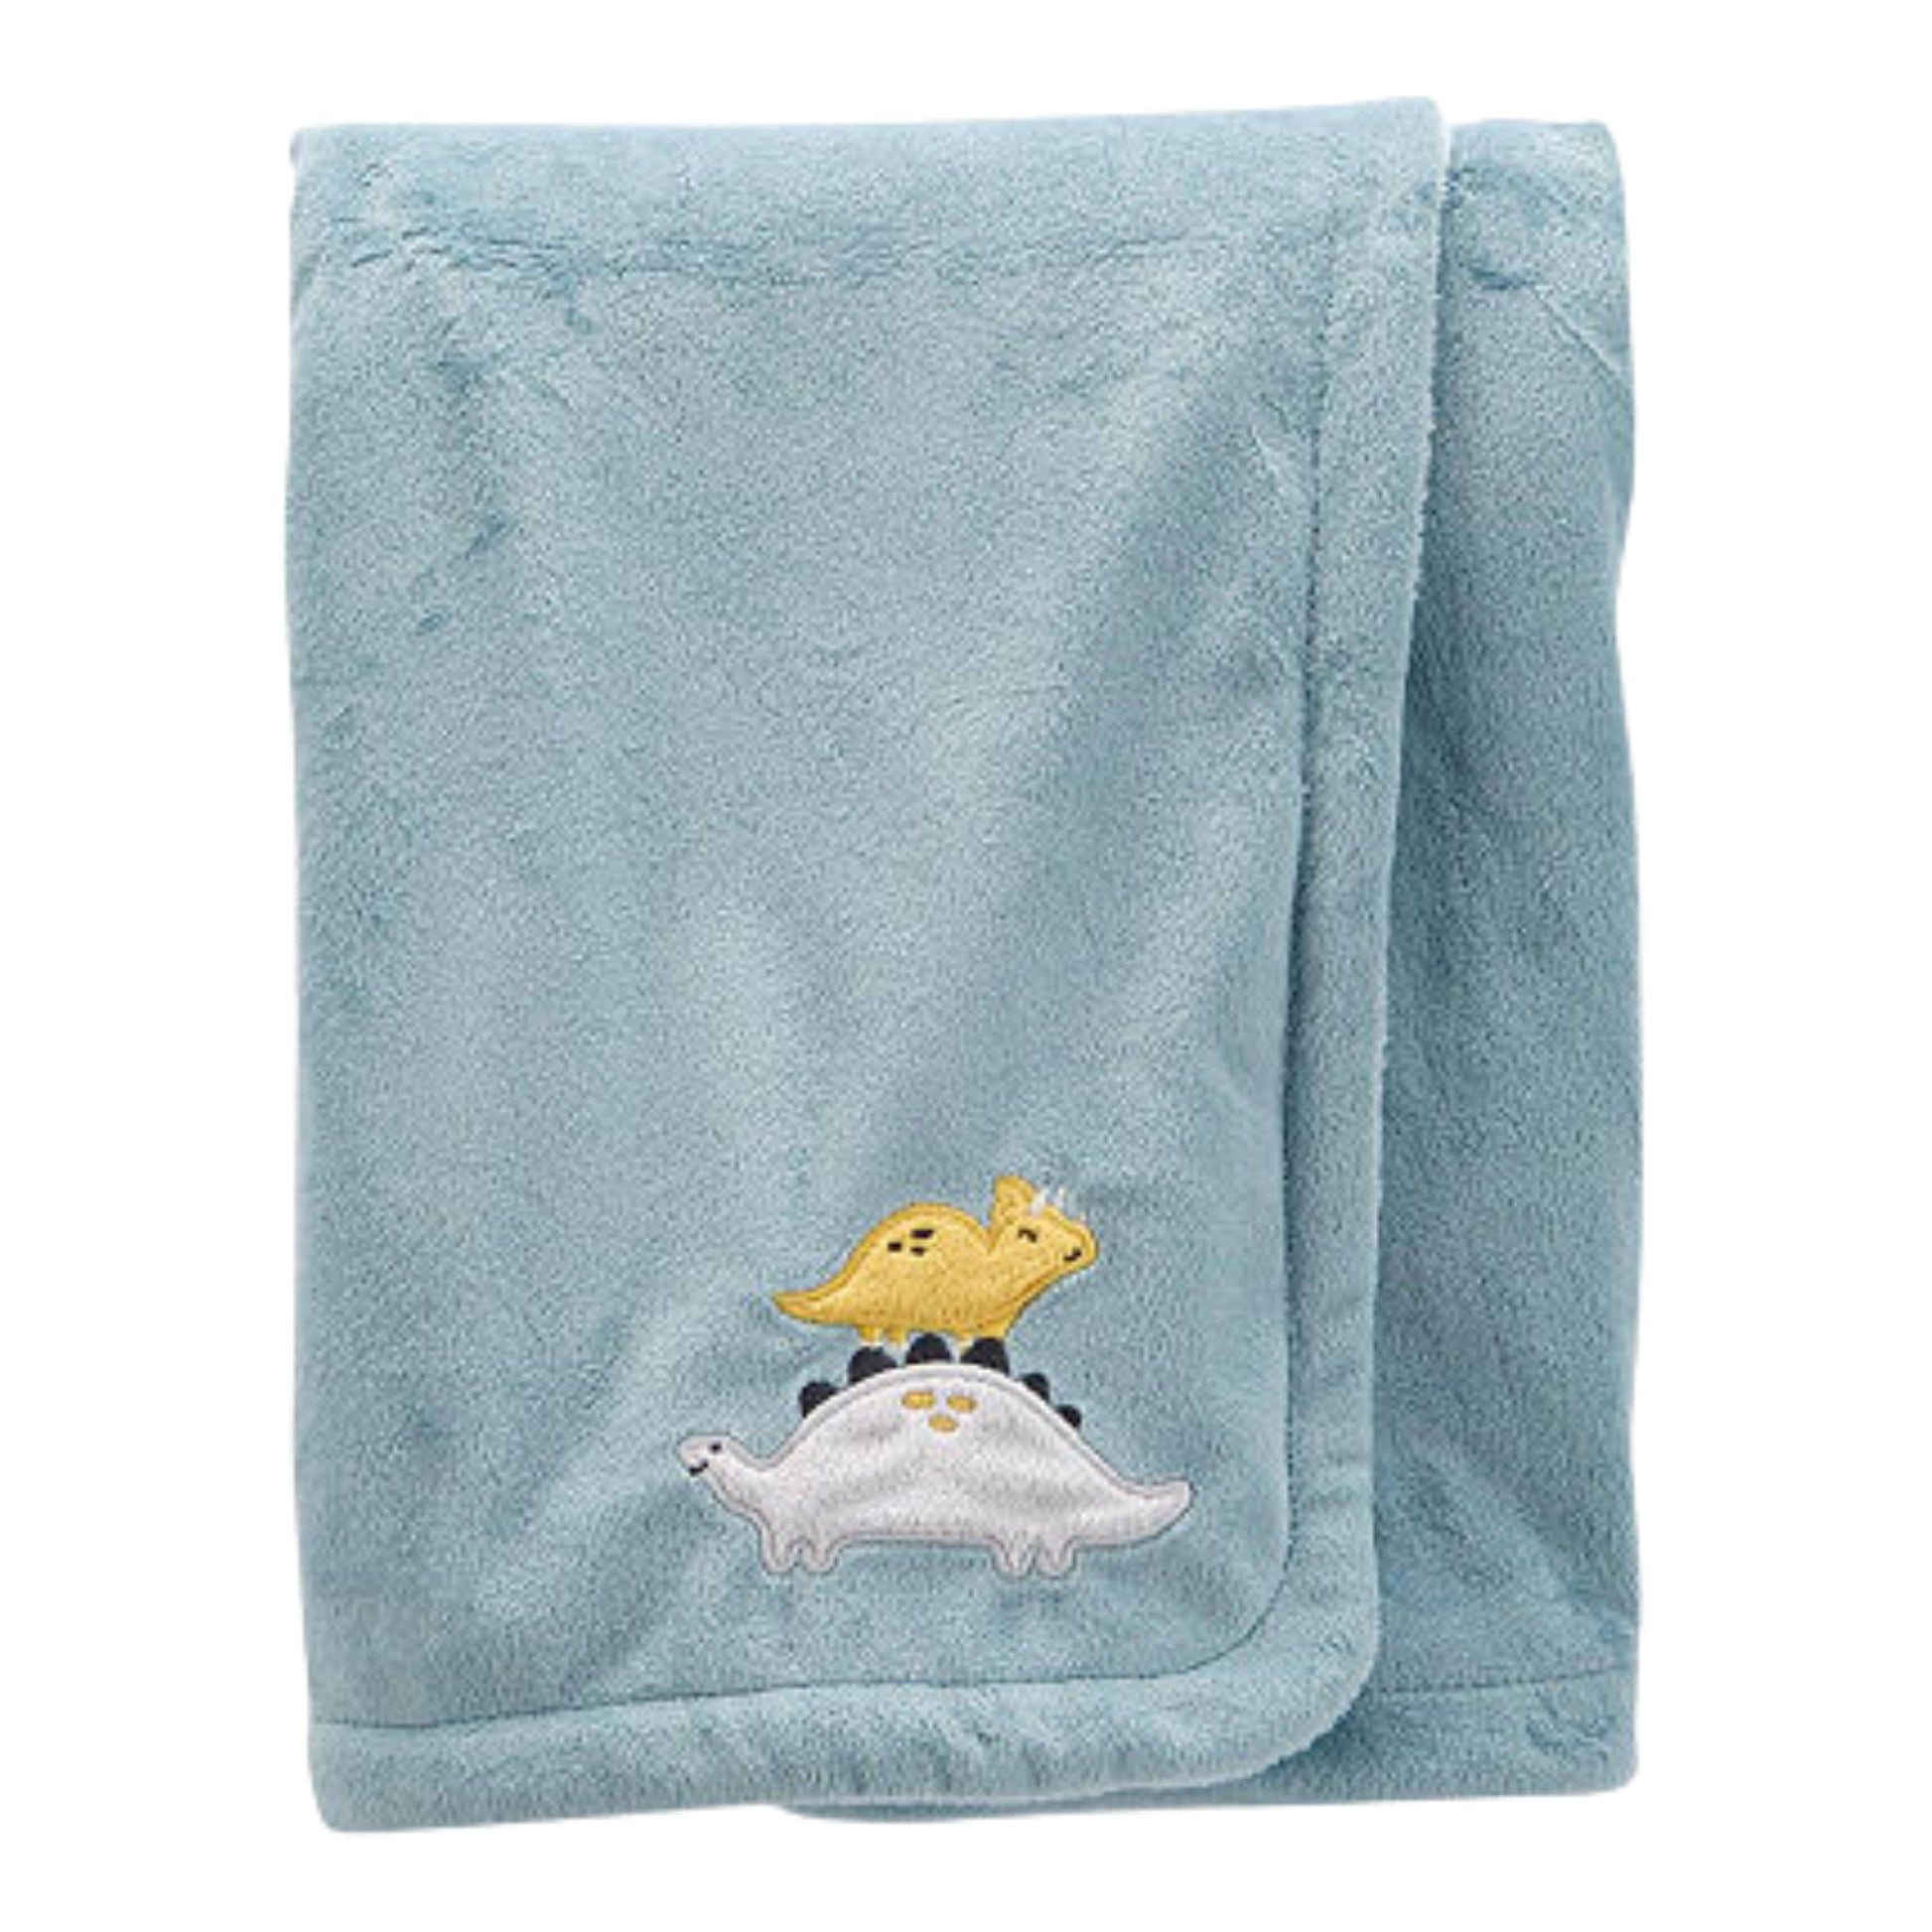 CARTER'S Baby Blankets Blue CARTER'S - BABY -  Dinosaur Fuzzy Plush Blanket